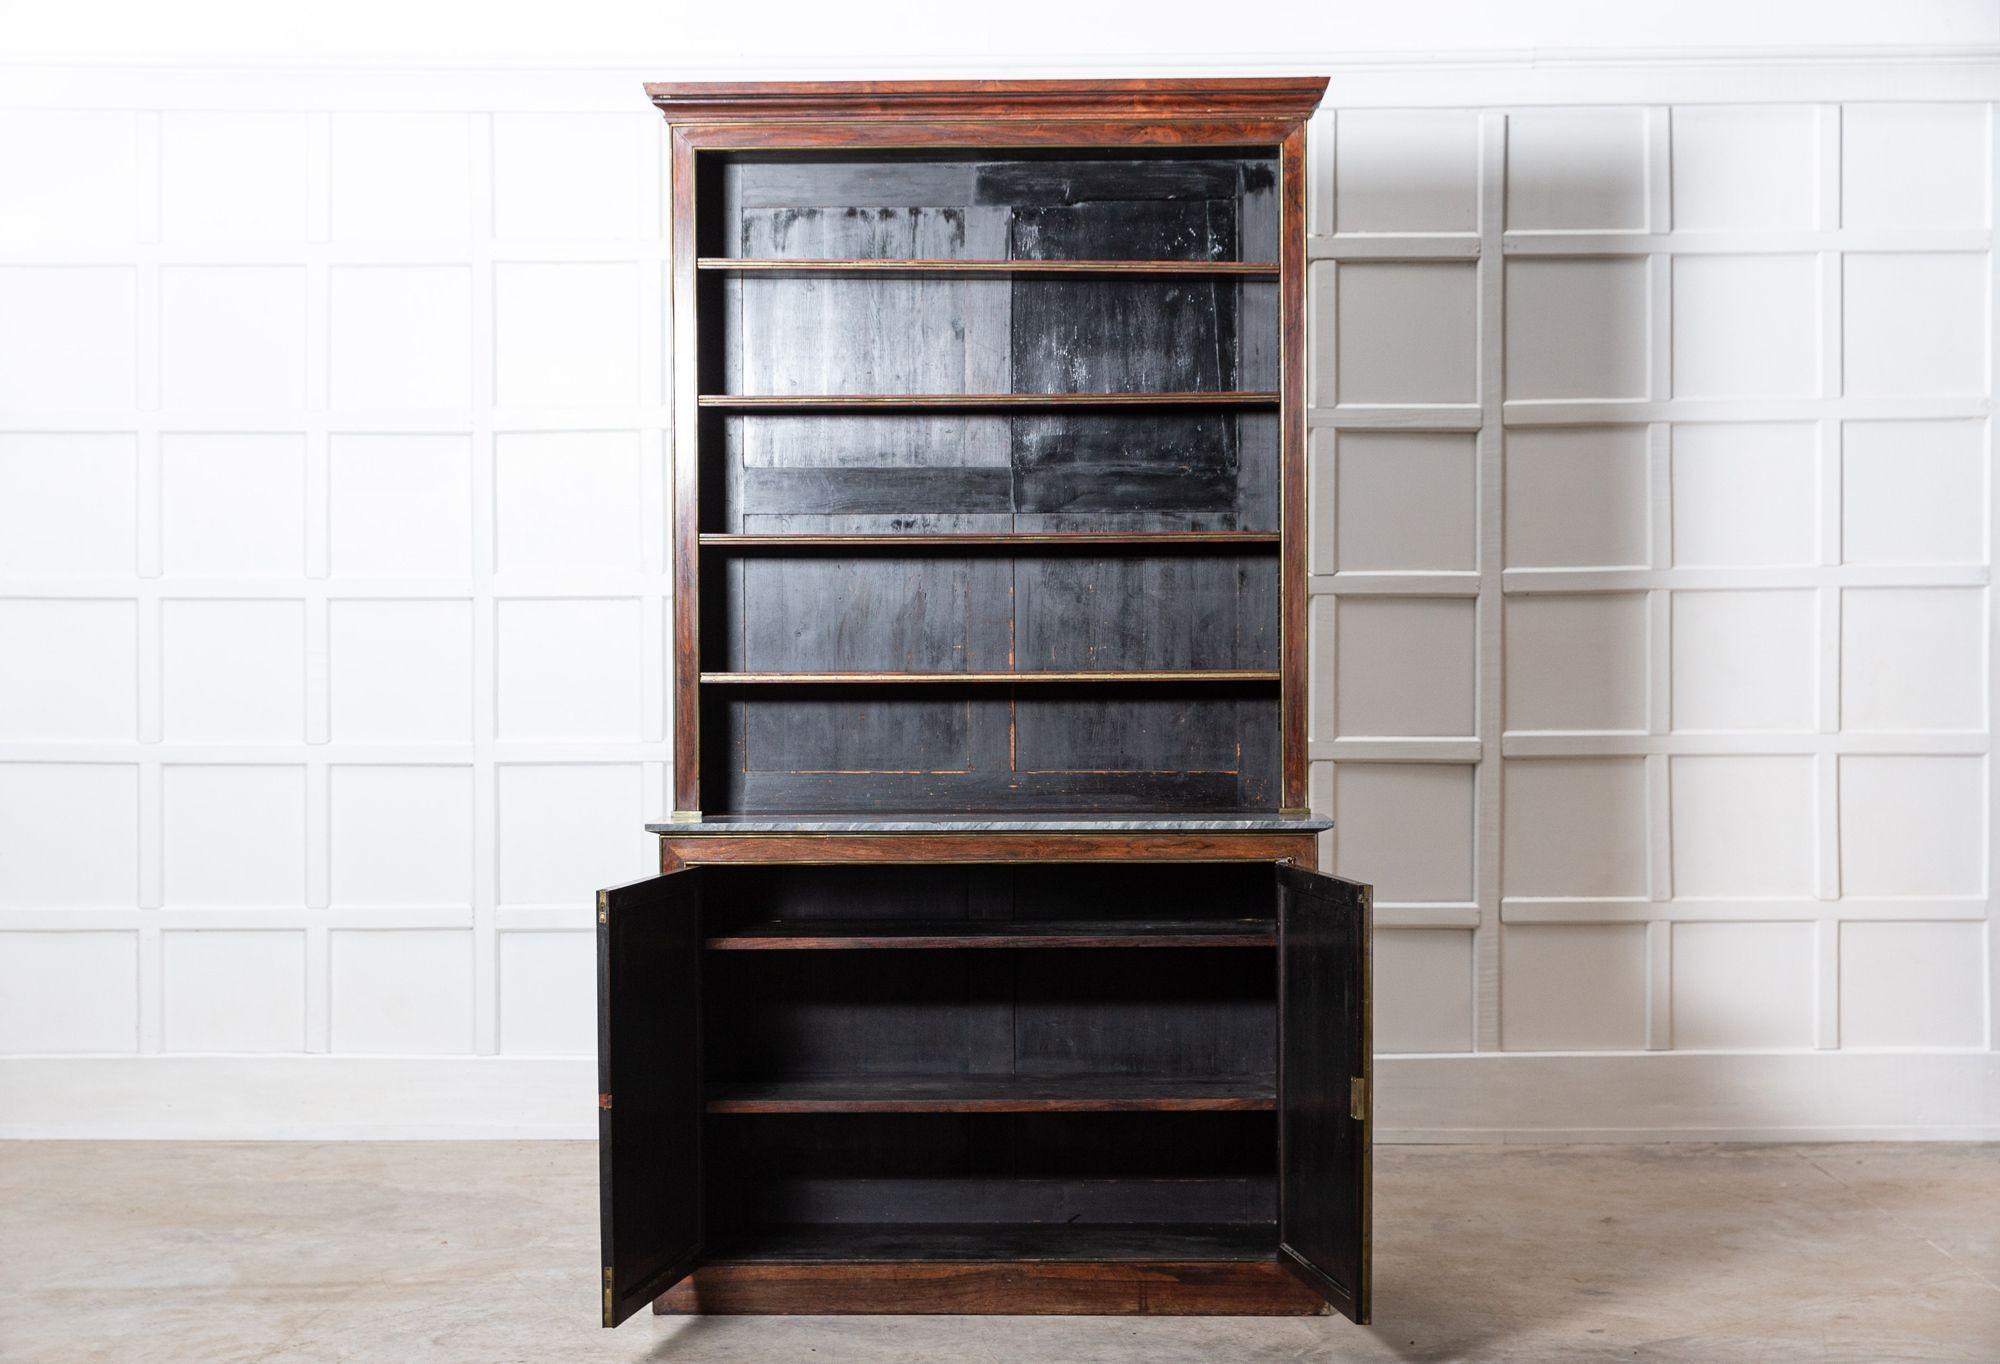 circa 1900
Large French Empire mahogany & marble bookcase cabinet

W128 x D42 x H234 cm
Base W124 x D42 x H88 cm
Top W128 x D23 x H146 cm.